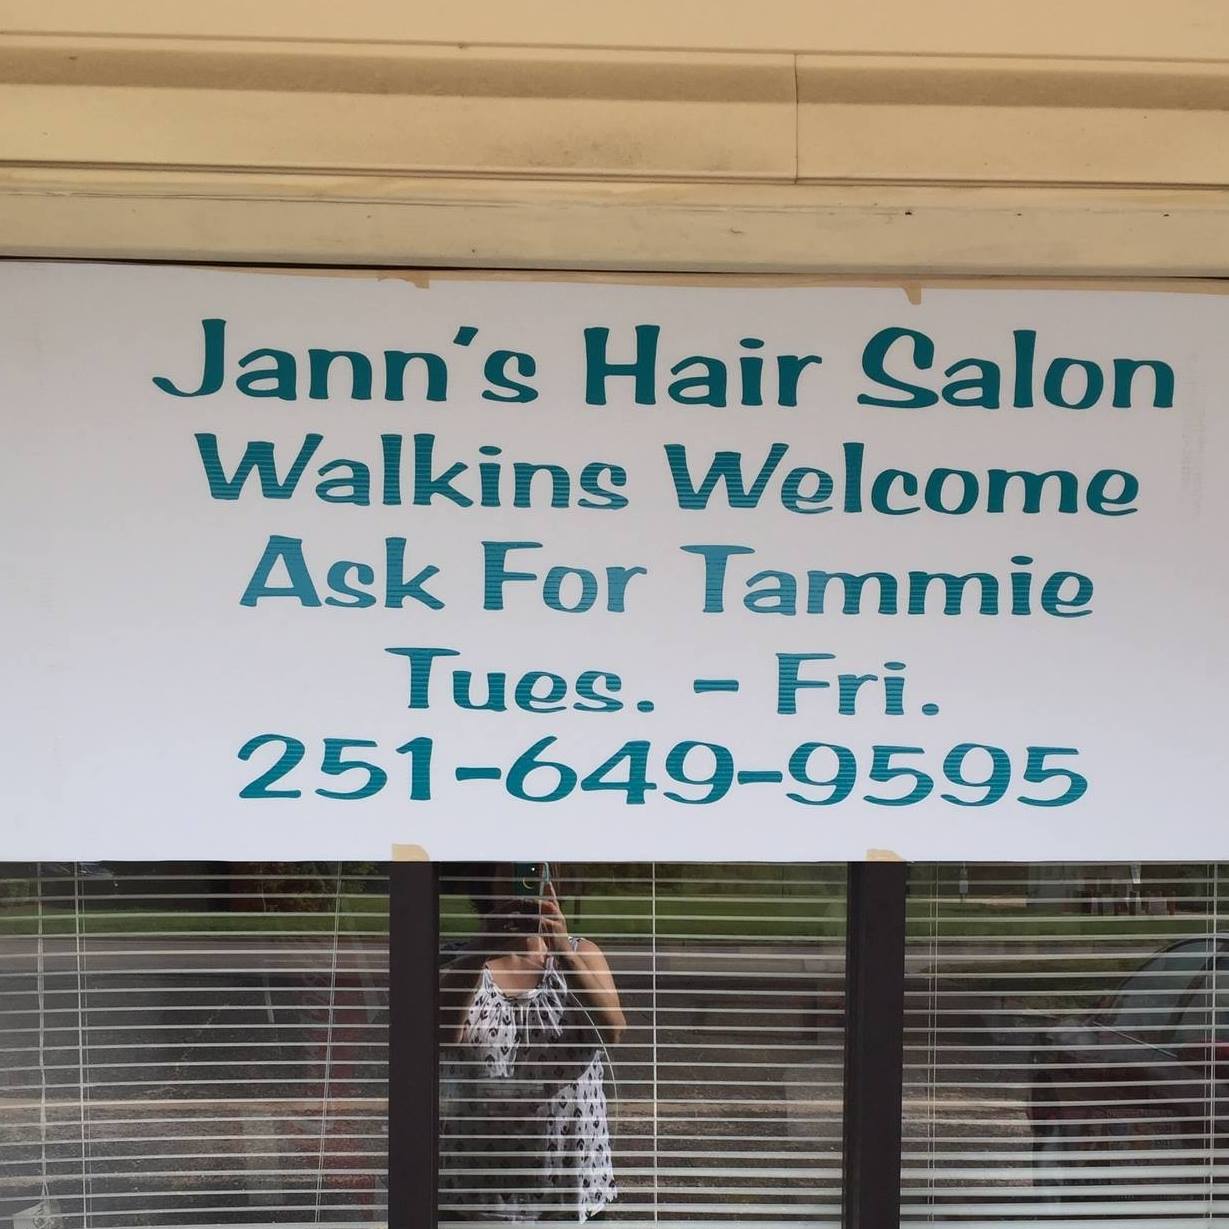 Jann's Hair Salon